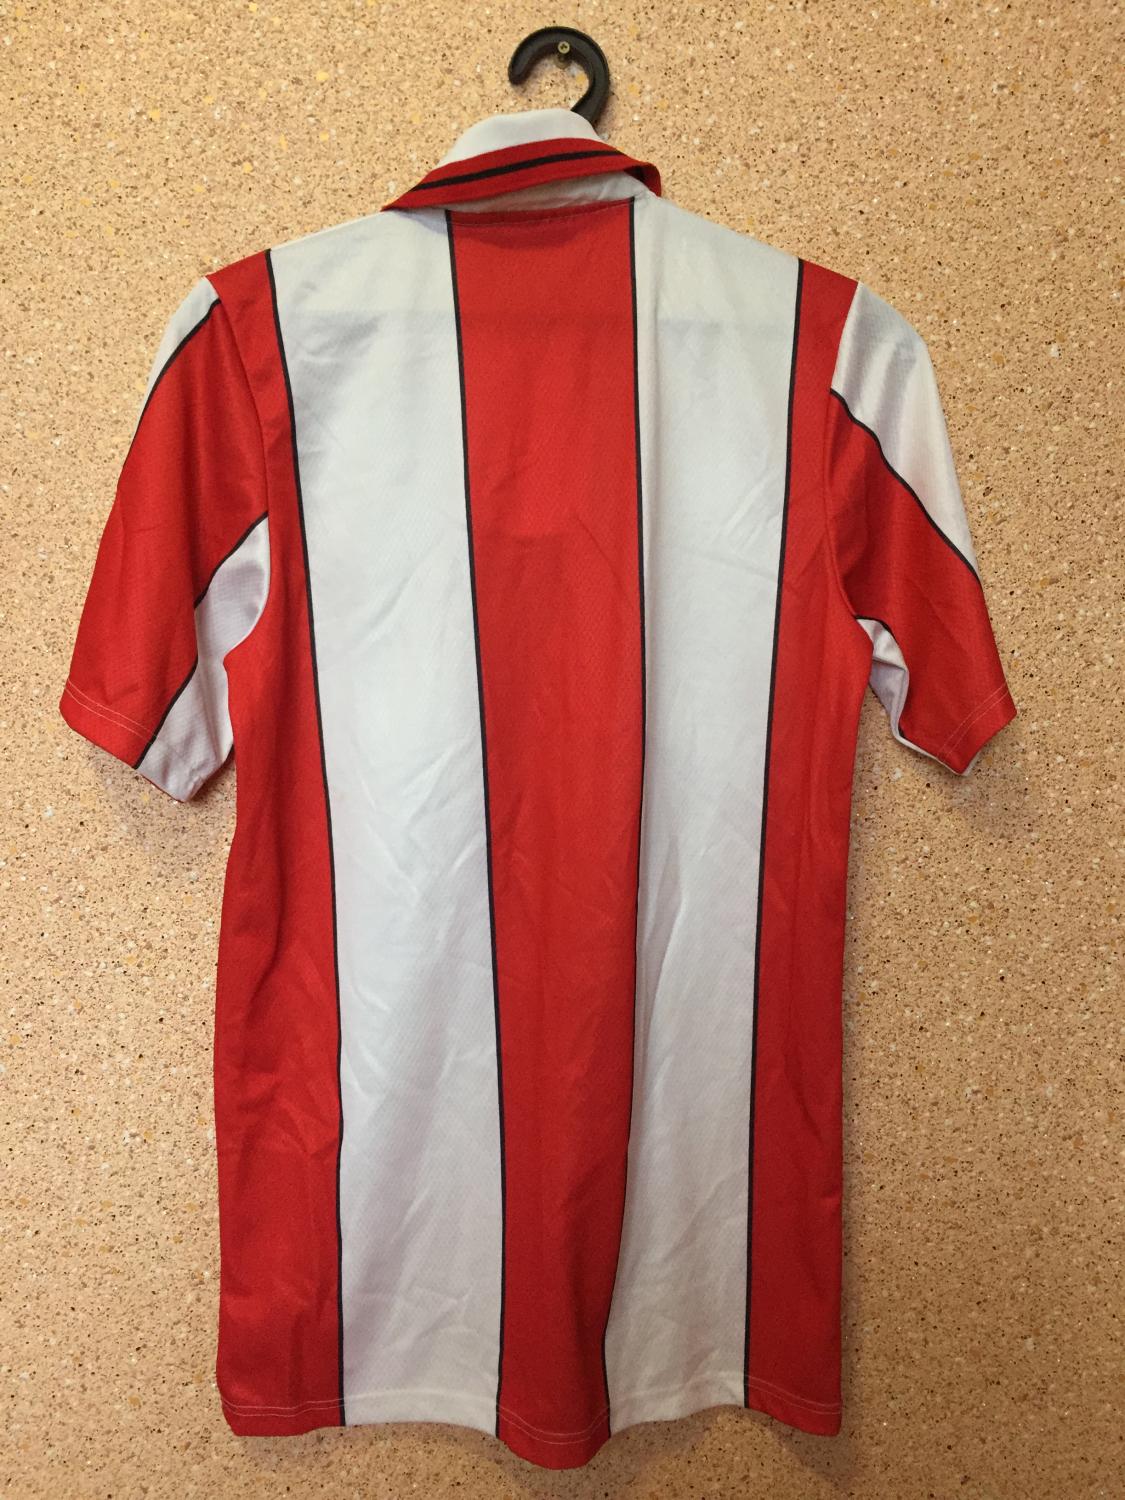 Stoke Home football shirt 1995 - 1996. Added on 2014-06-15, 22:01